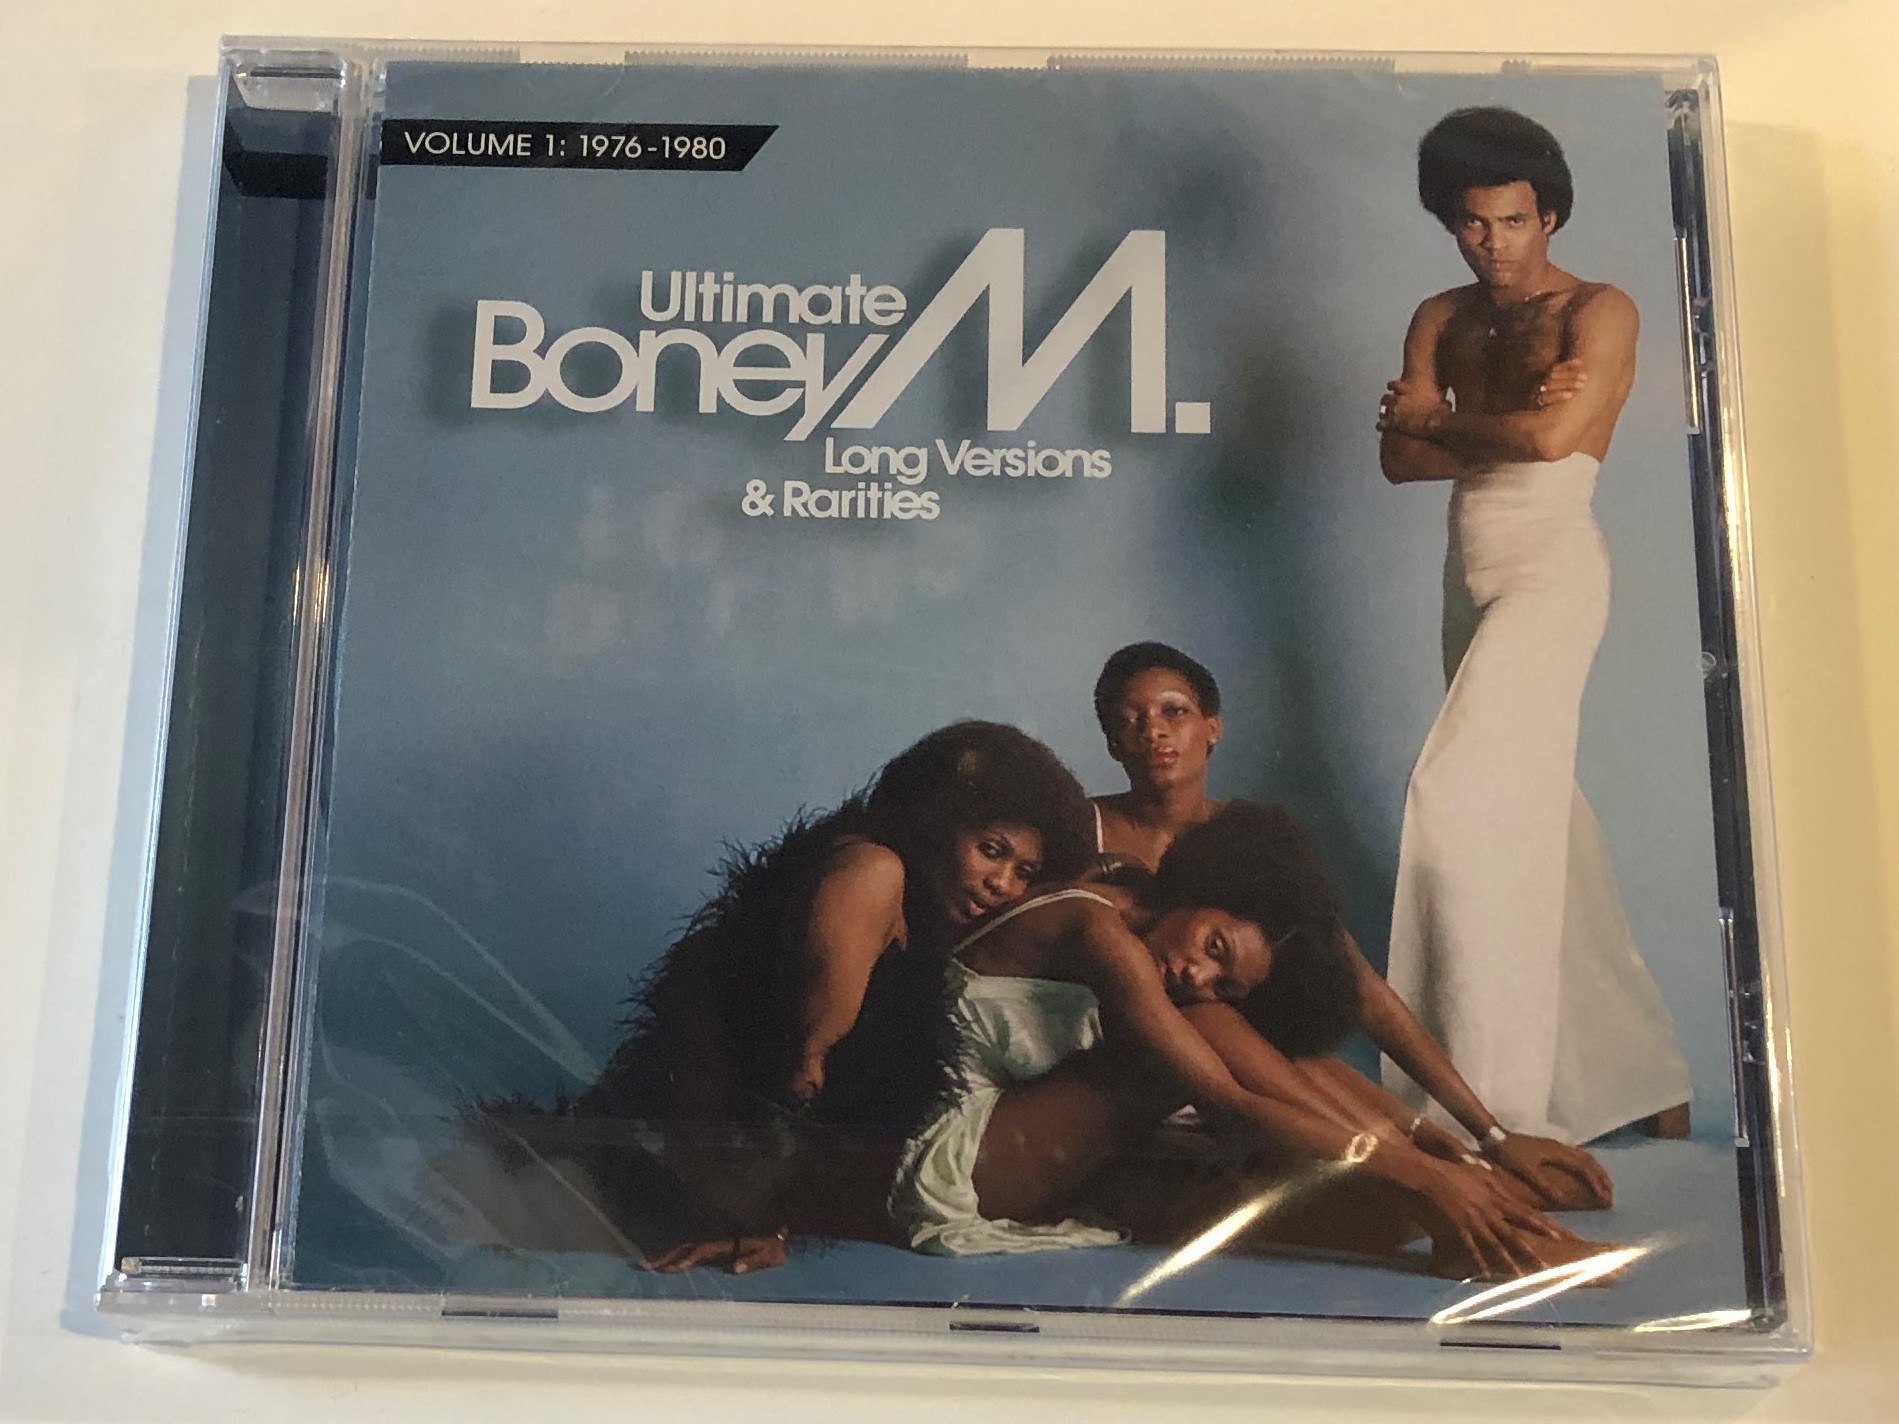 ultimate-boney-m.-long-versions-rarities-volume-1-1976-1980-sony-bmg-music-entertainment-audio-cd-2008-88697349102-1-.jpg